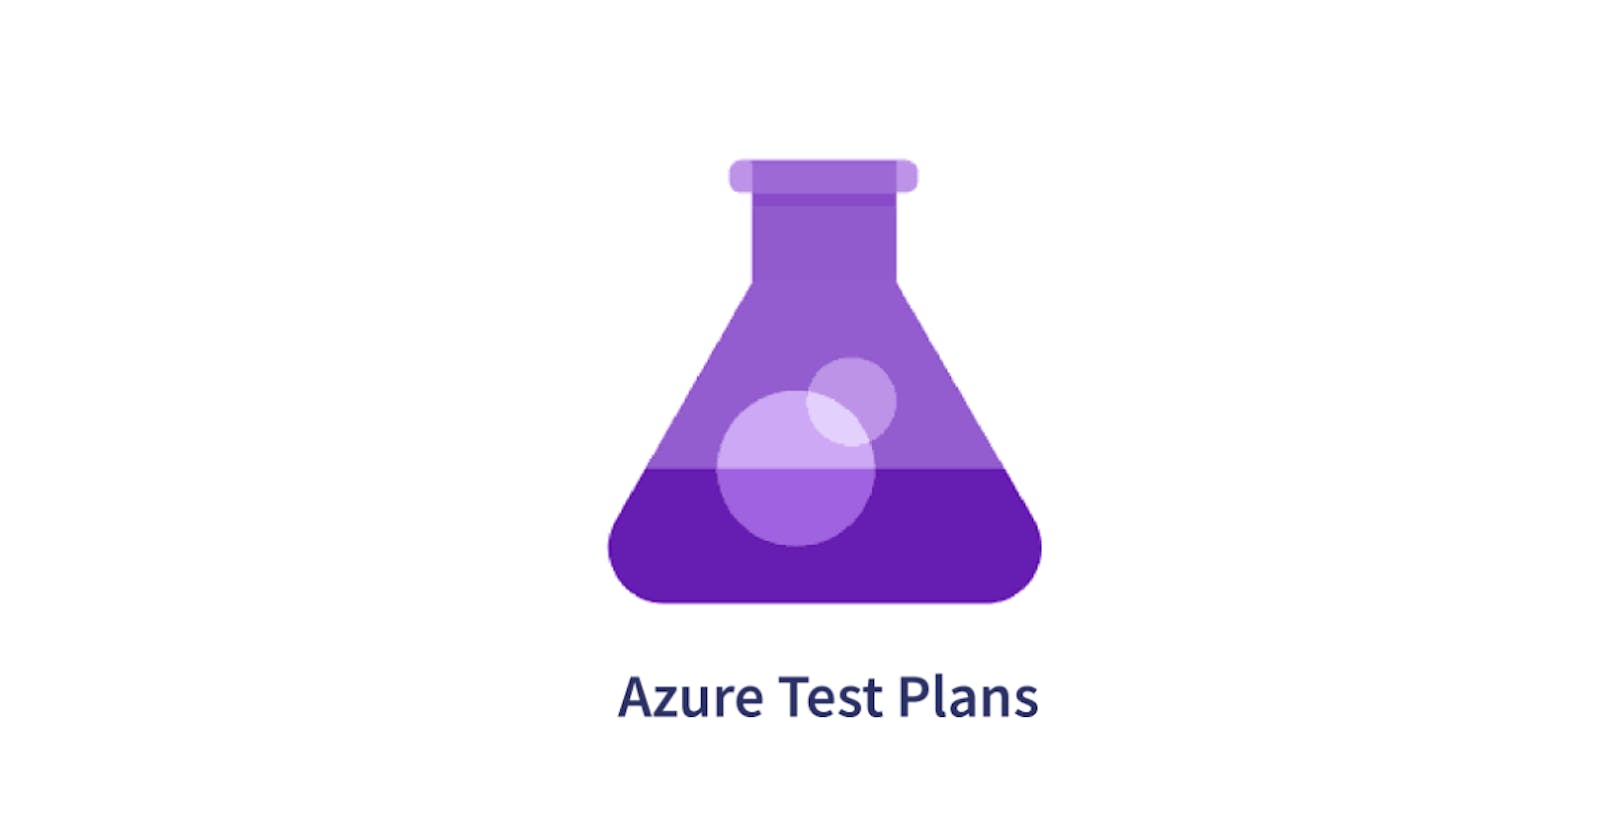 Azure Test Plans - A Comprehensive Testing Solution